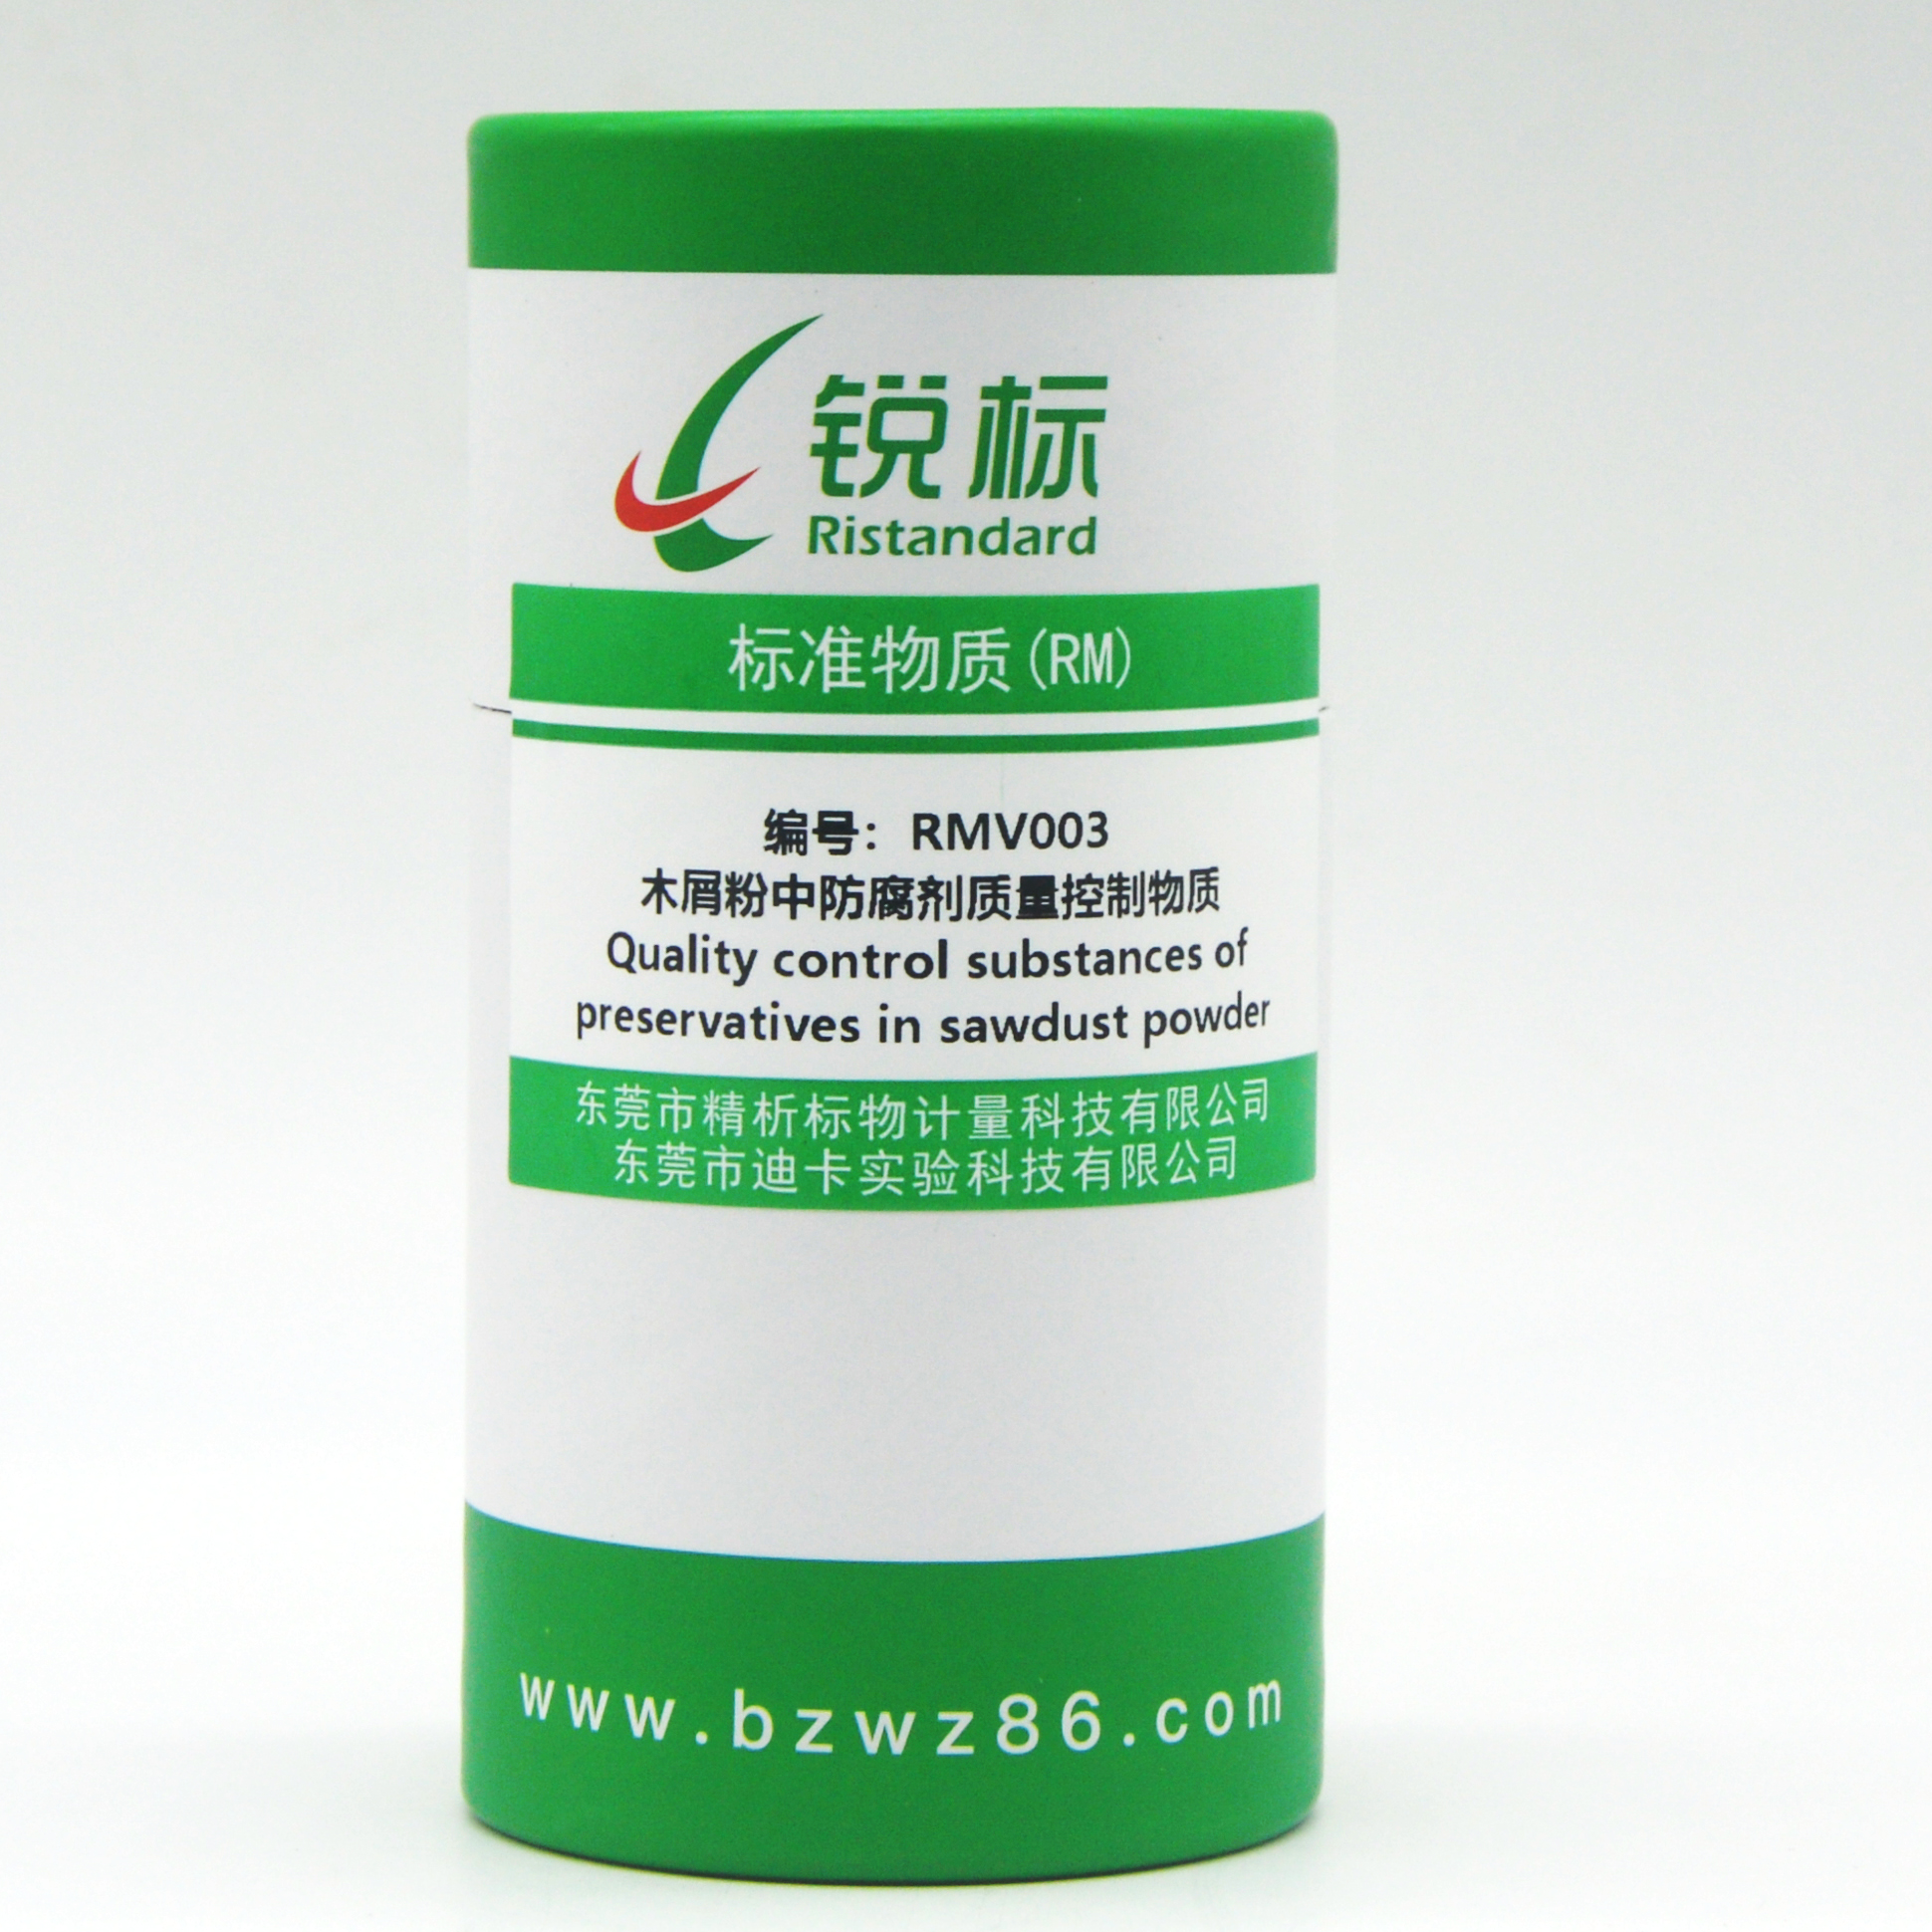 RMV003，木屑粉中防腐剂质量控制物质